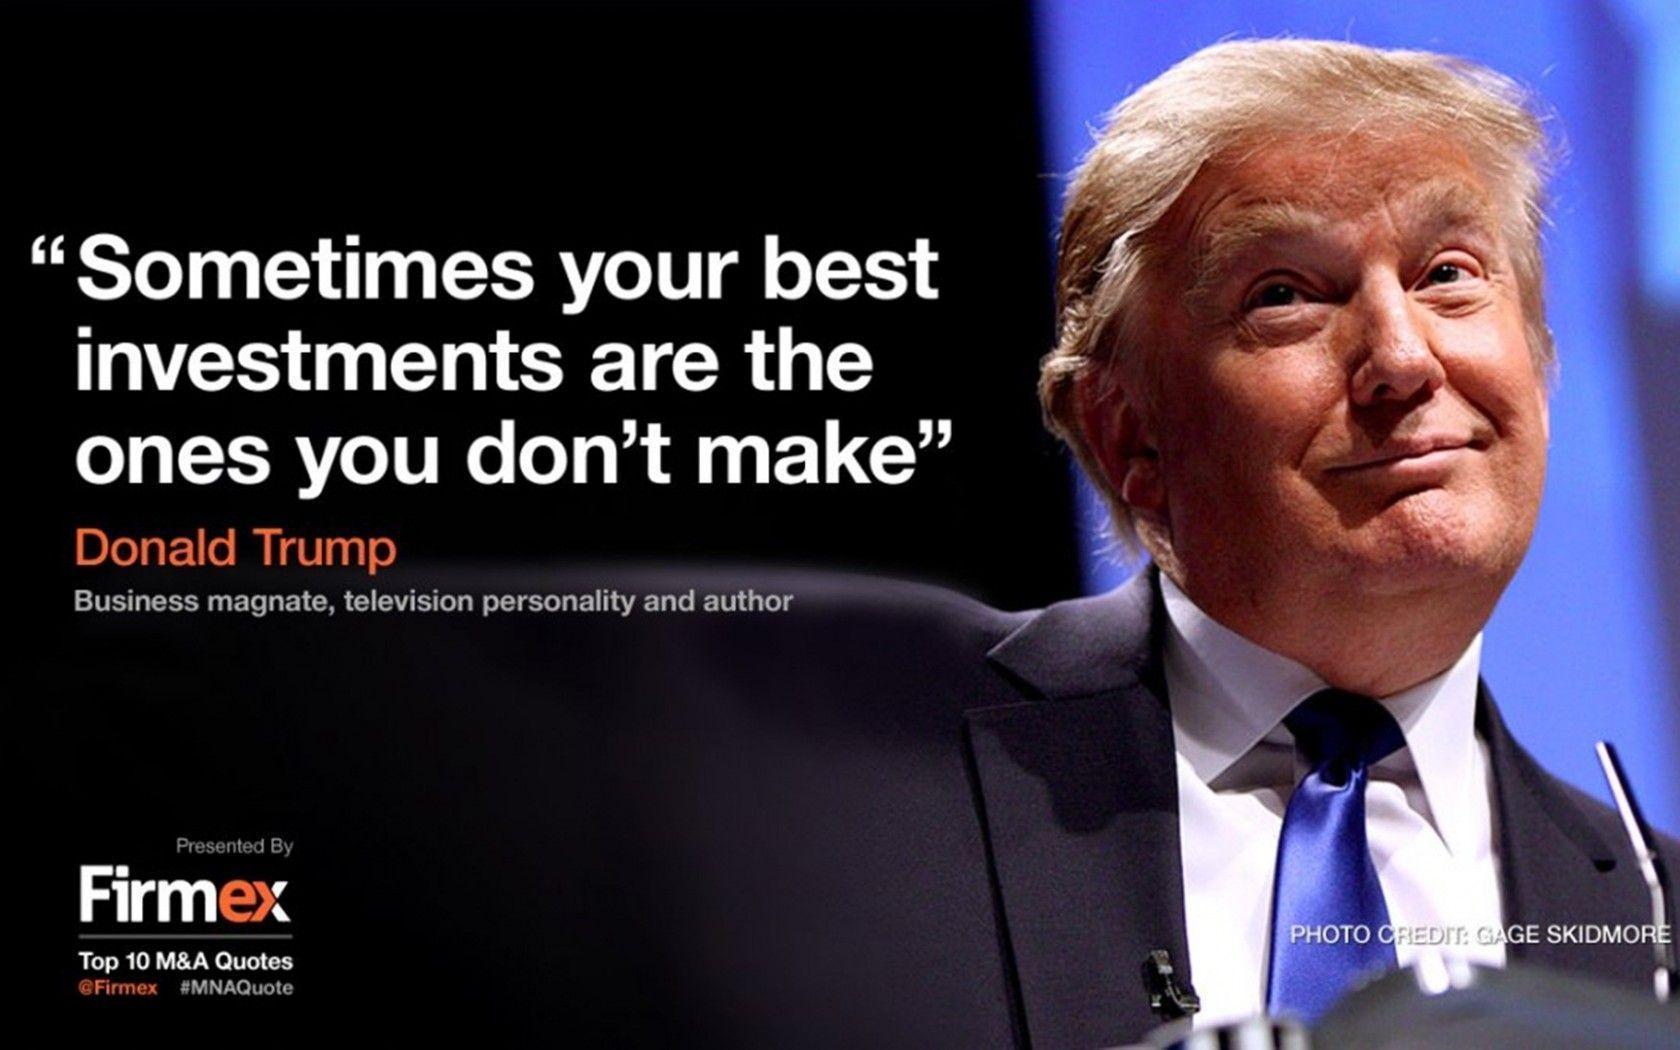 Donald Trump Investment Quotes Wallpaper 11420